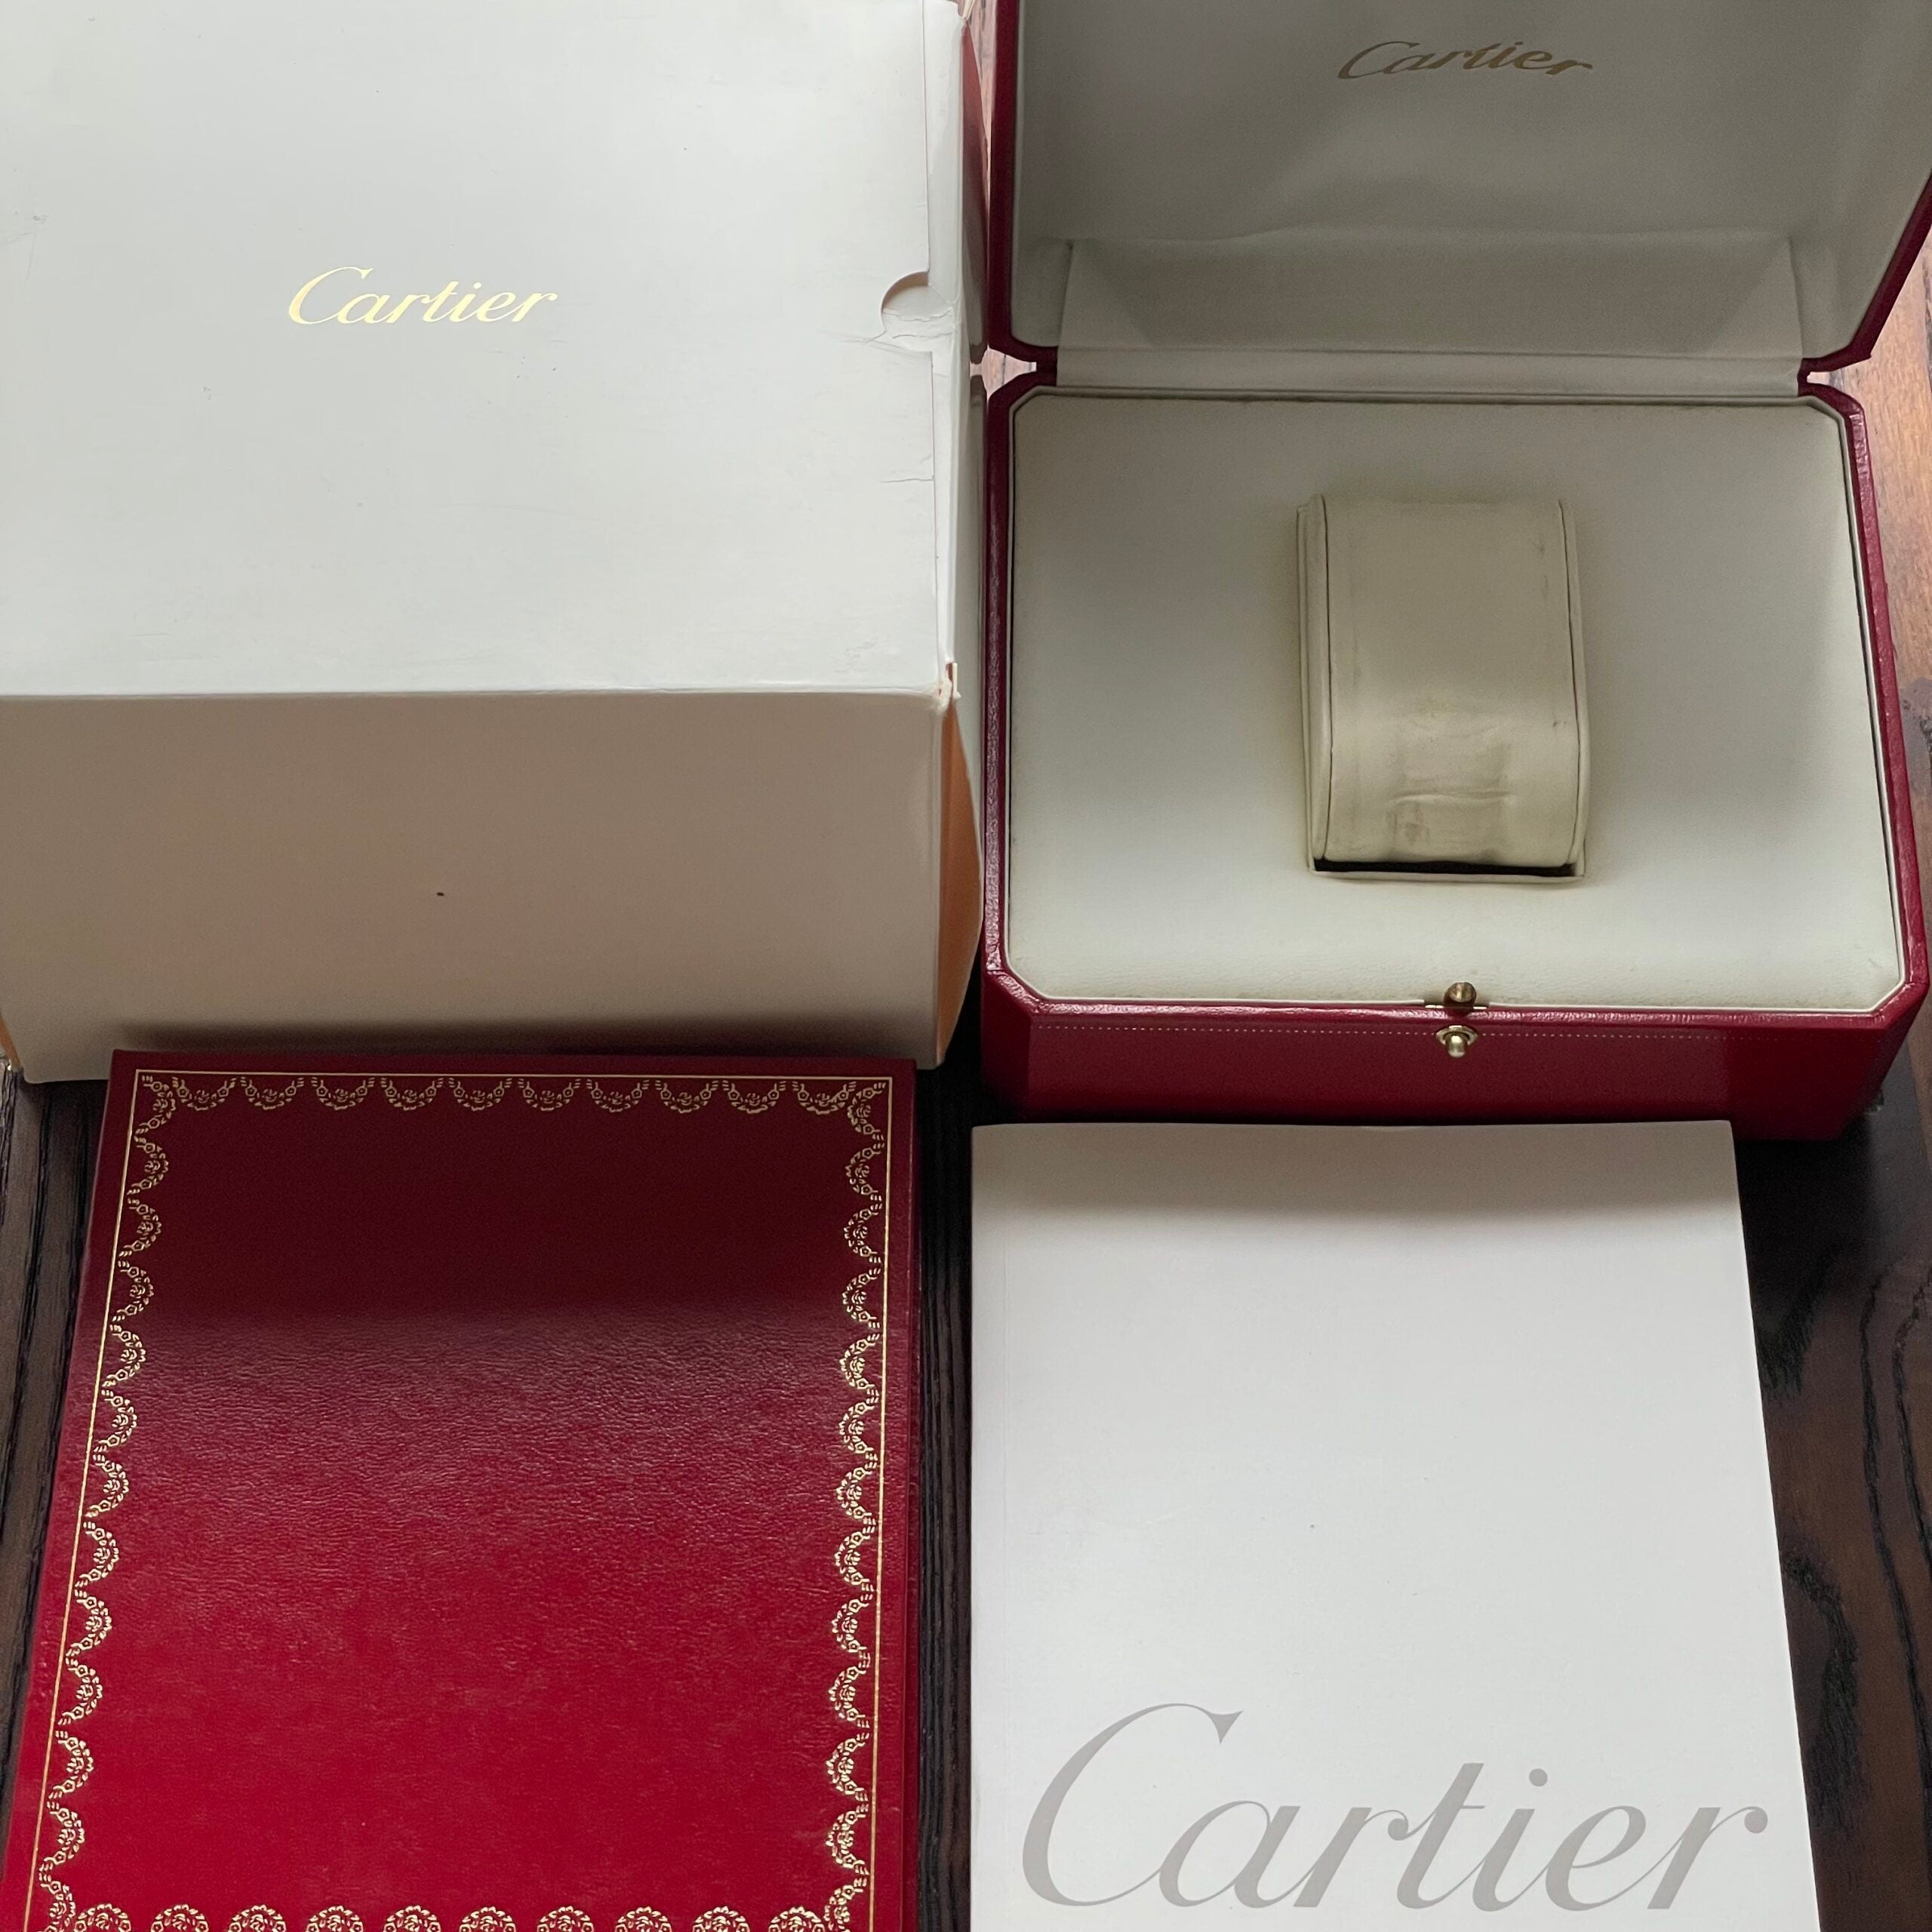 【Cartier】タンクアメリカンSM 18KYG 純正ボックス付き